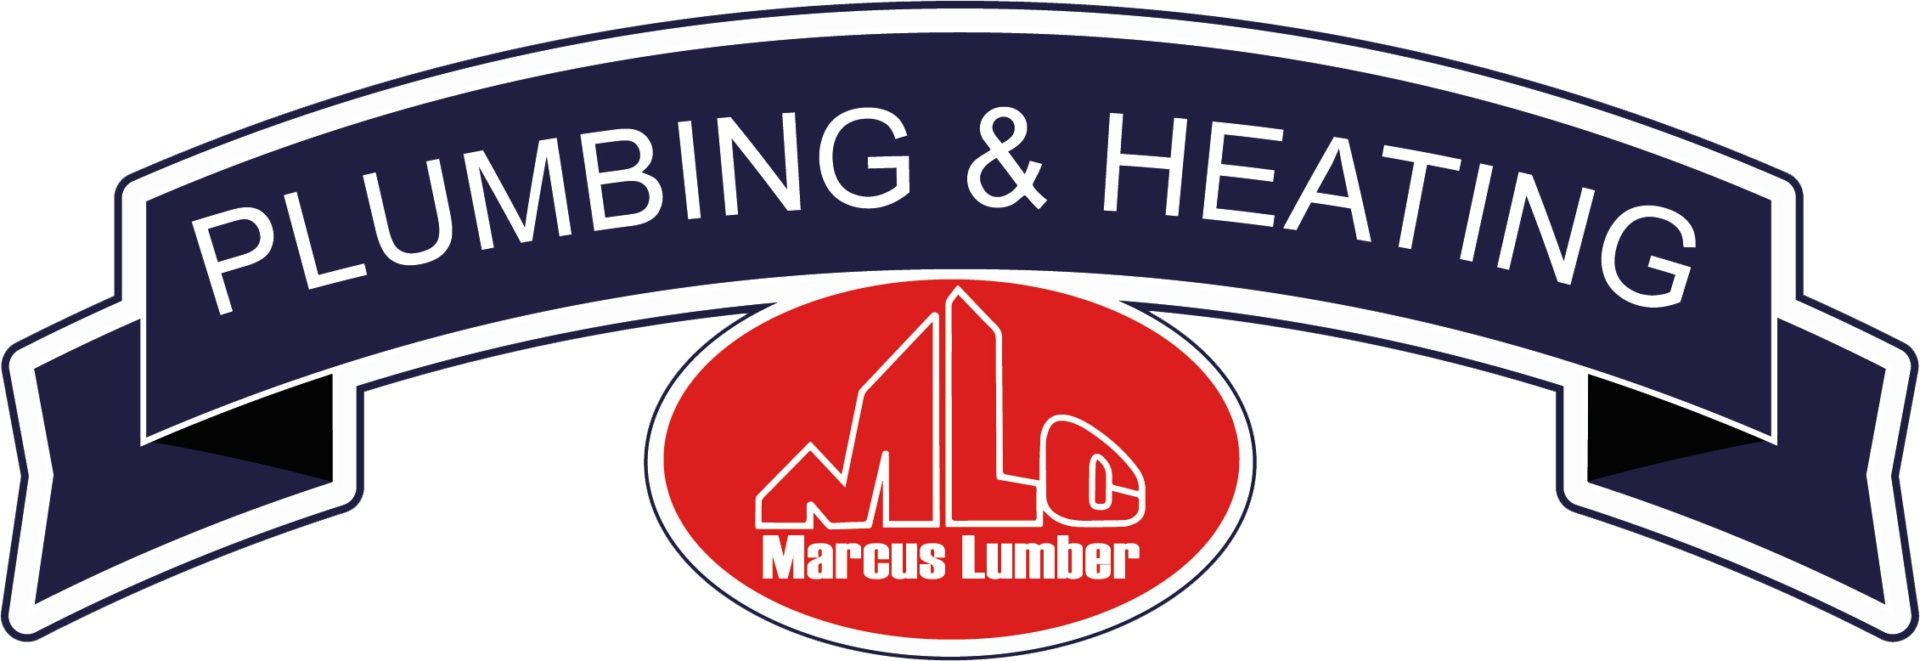 Marcus Lumber Plumbing and Heating